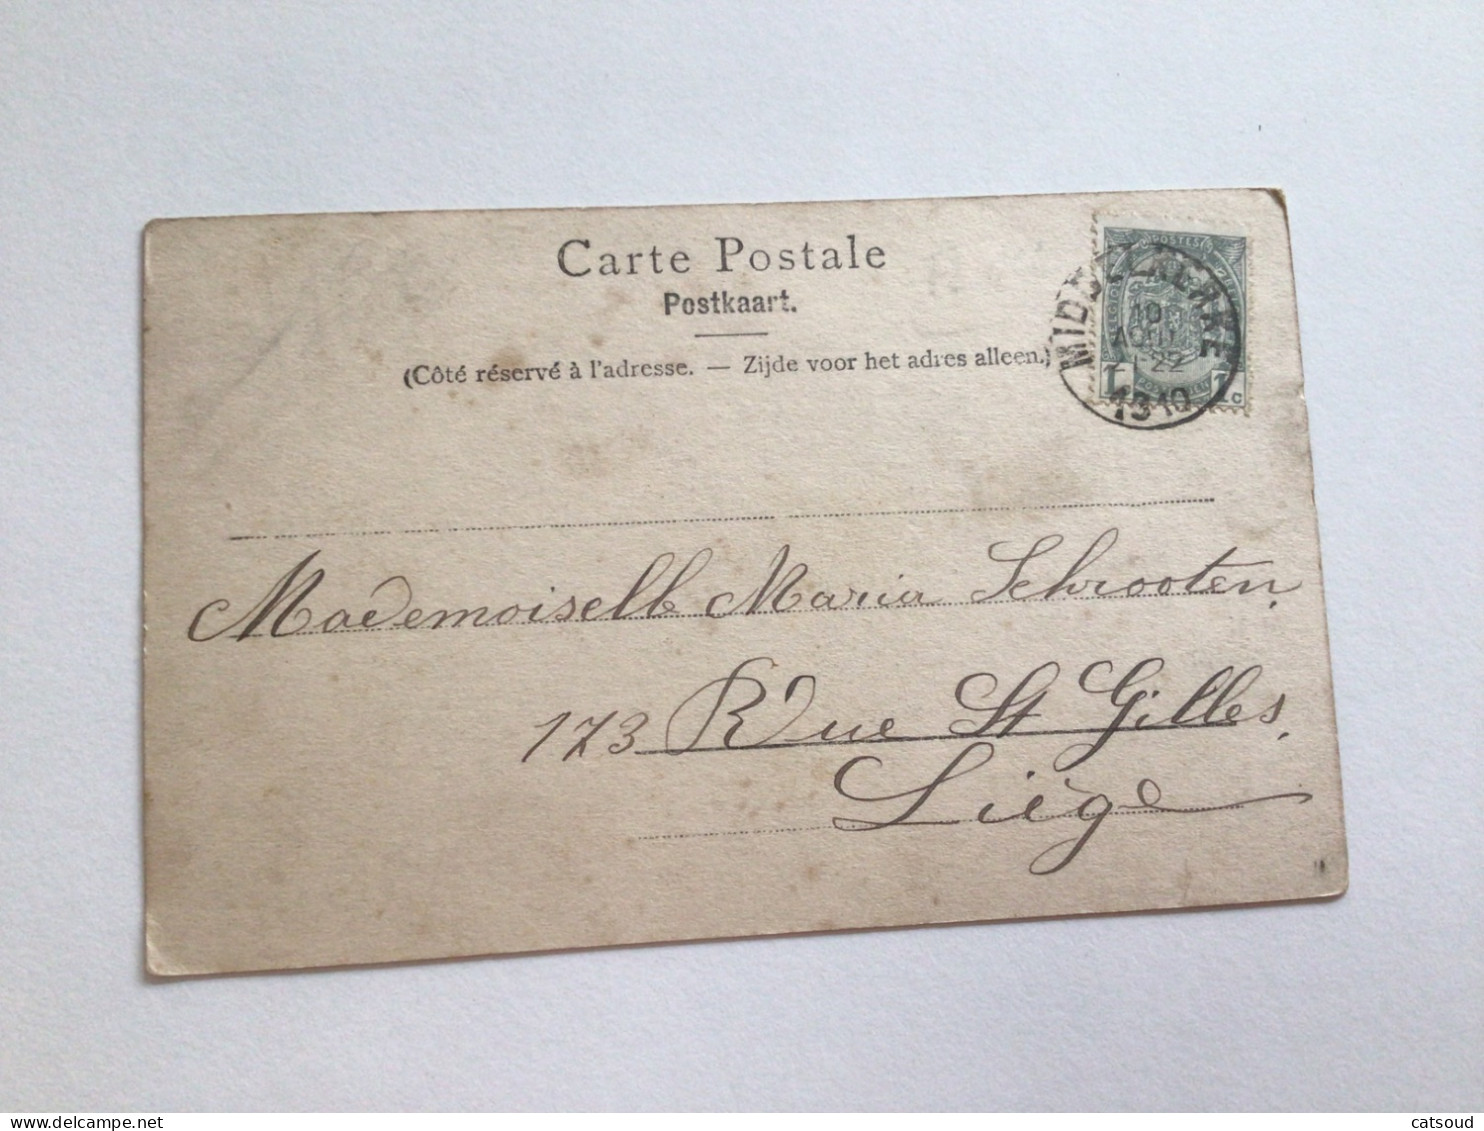 Carte Postale Ancienne (1910) Middelkerke - Middelkerke